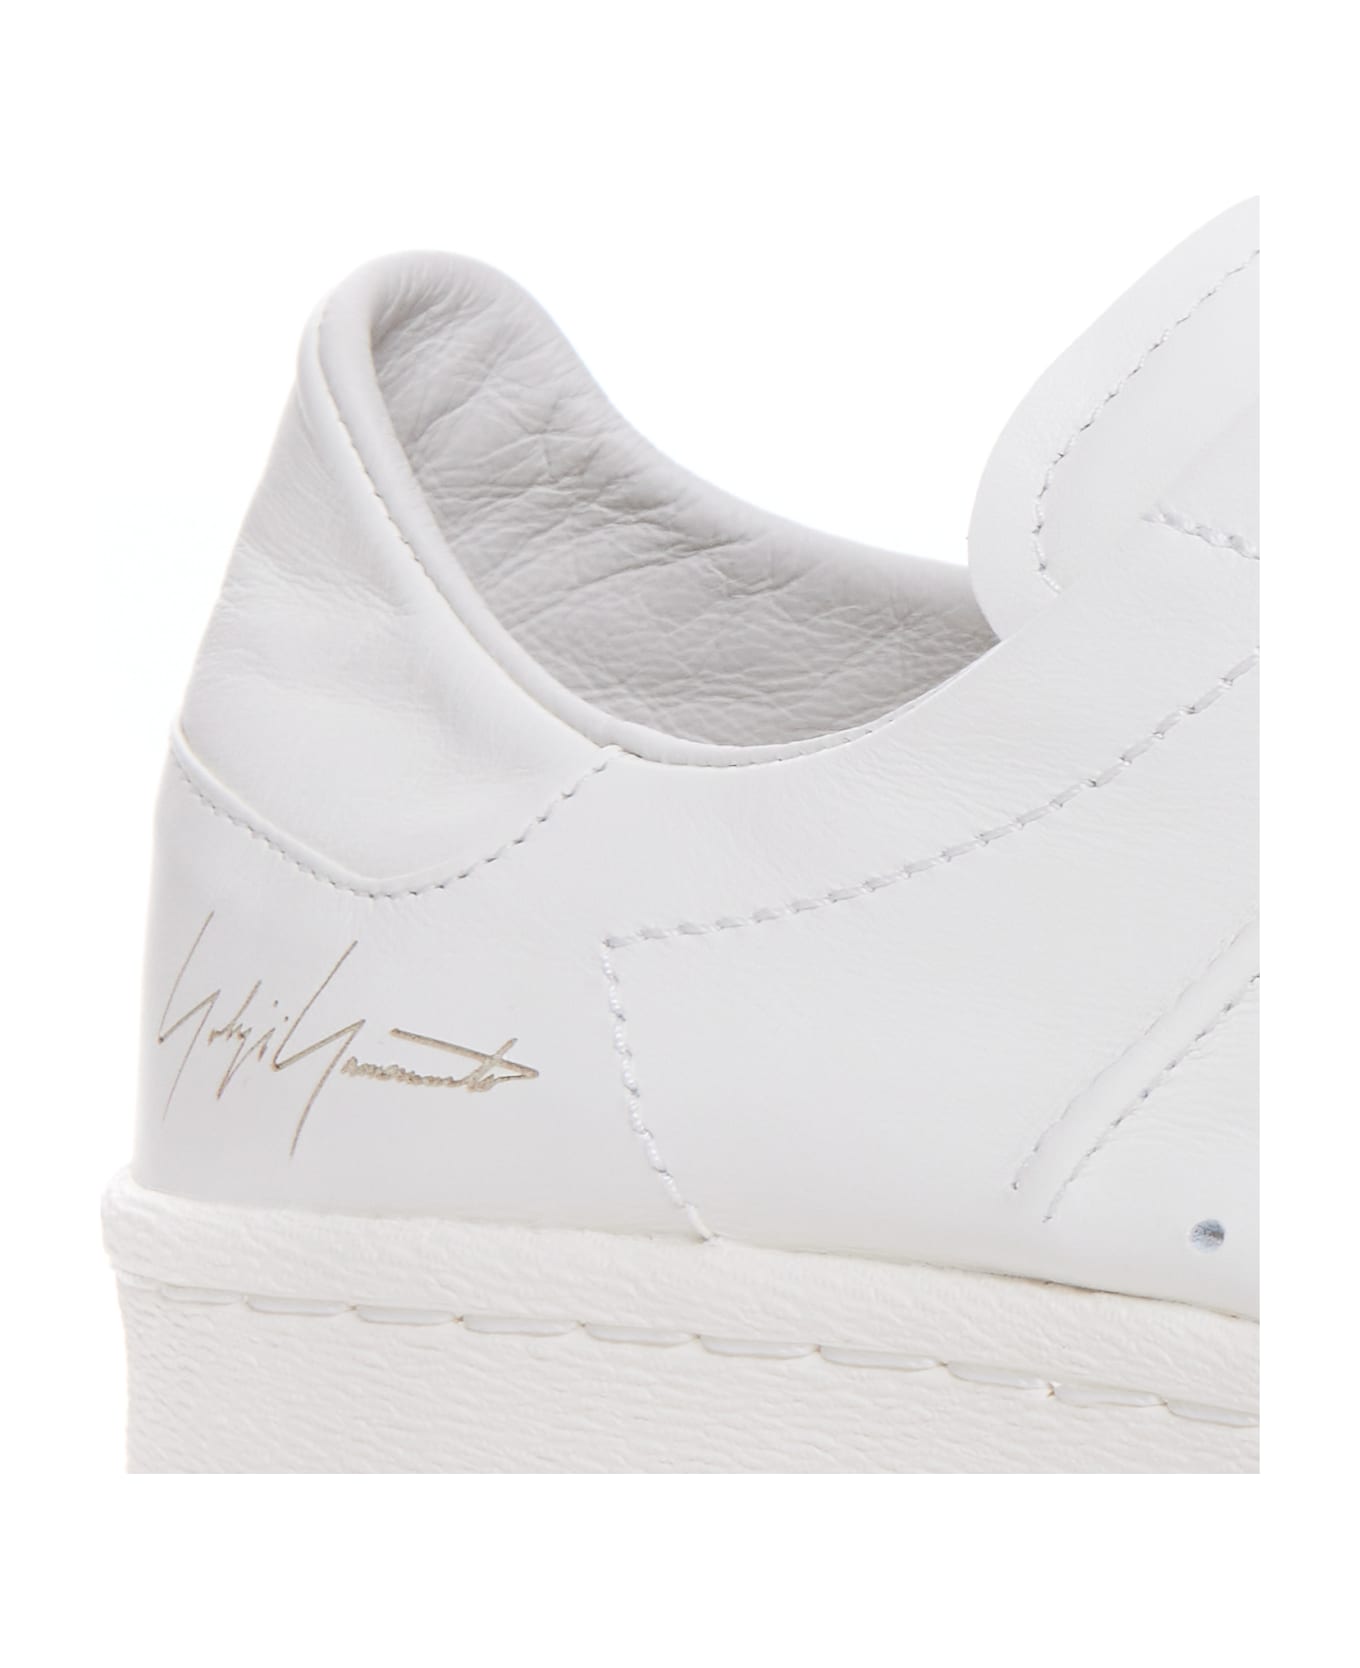 Y-3 Superstar Sneakers - White